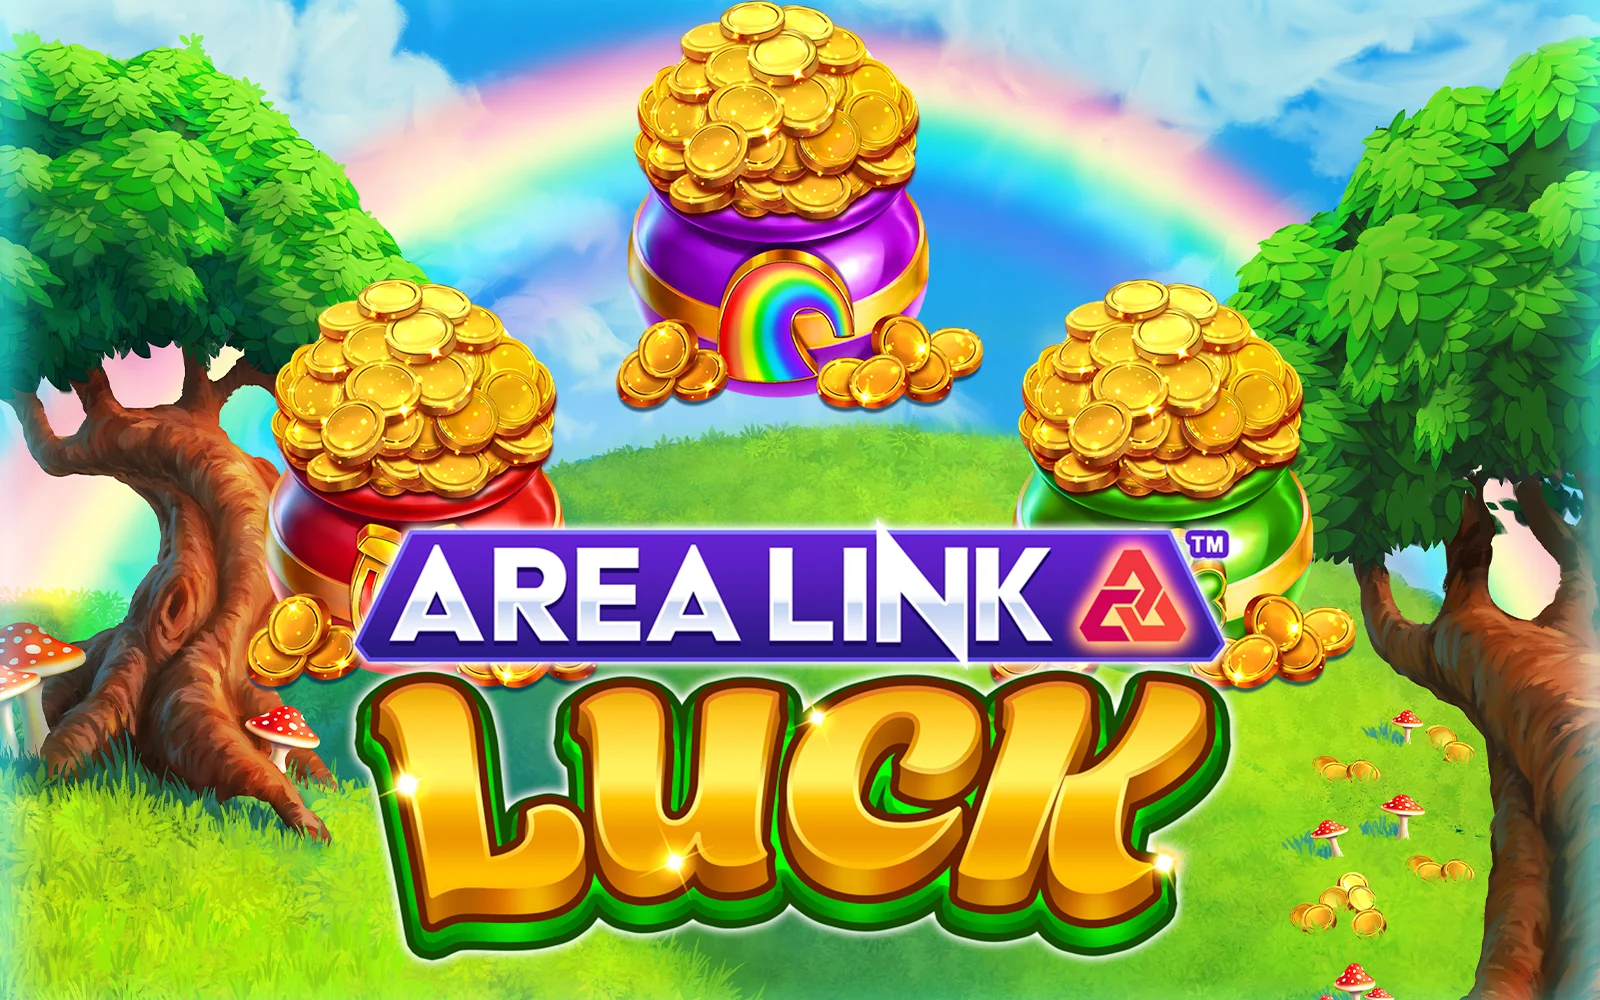 Грайте у Area Link™ Luck в онлайн-казино Starcasino.be